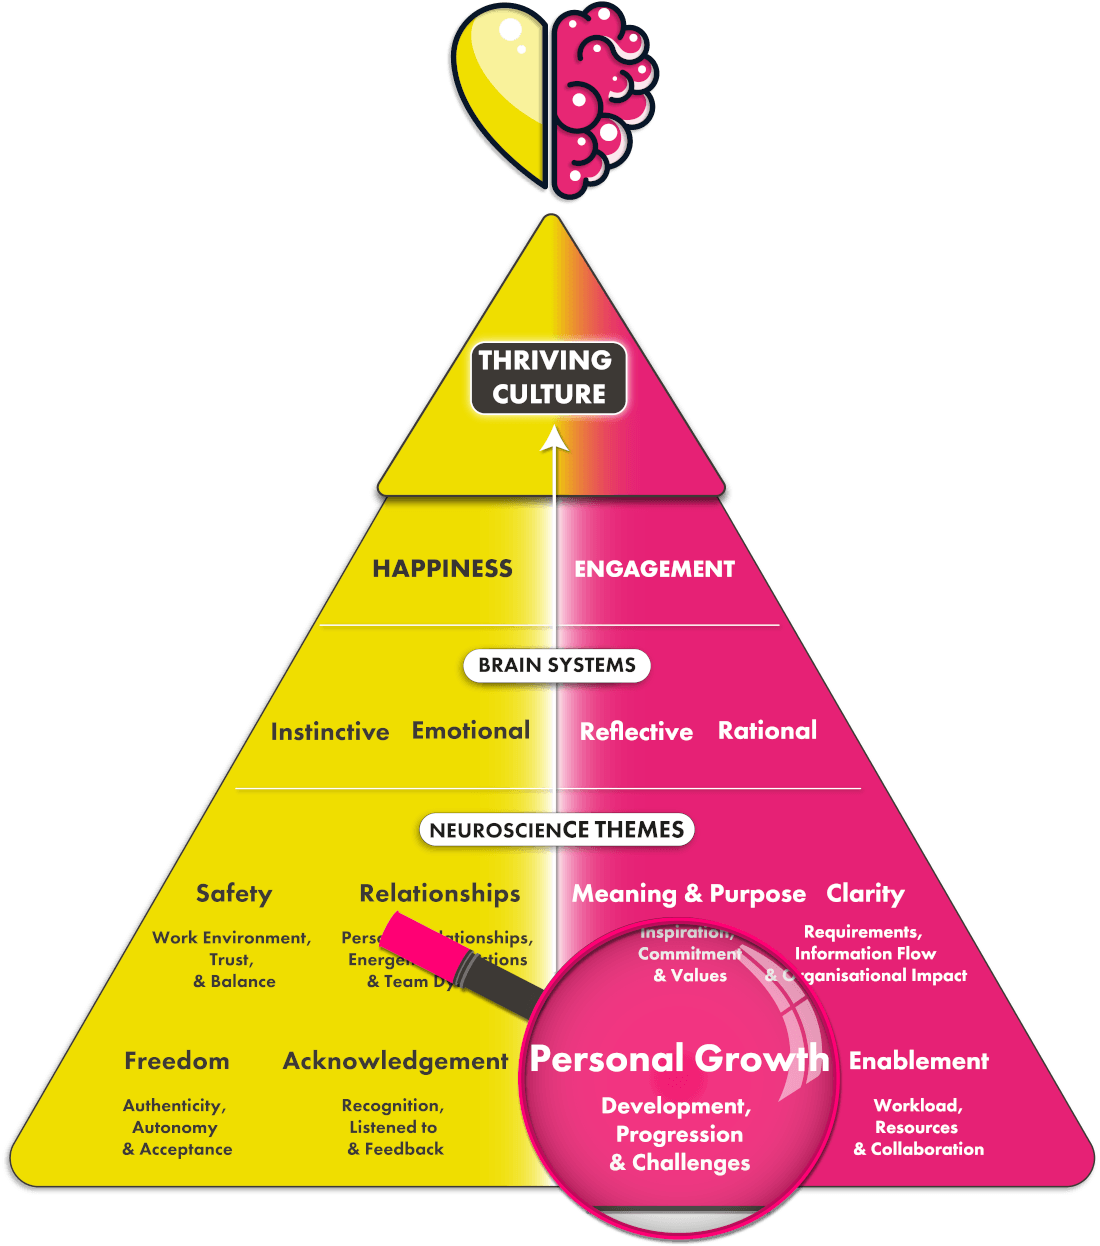 Personal growth neuroscience theme on pyramid diagram